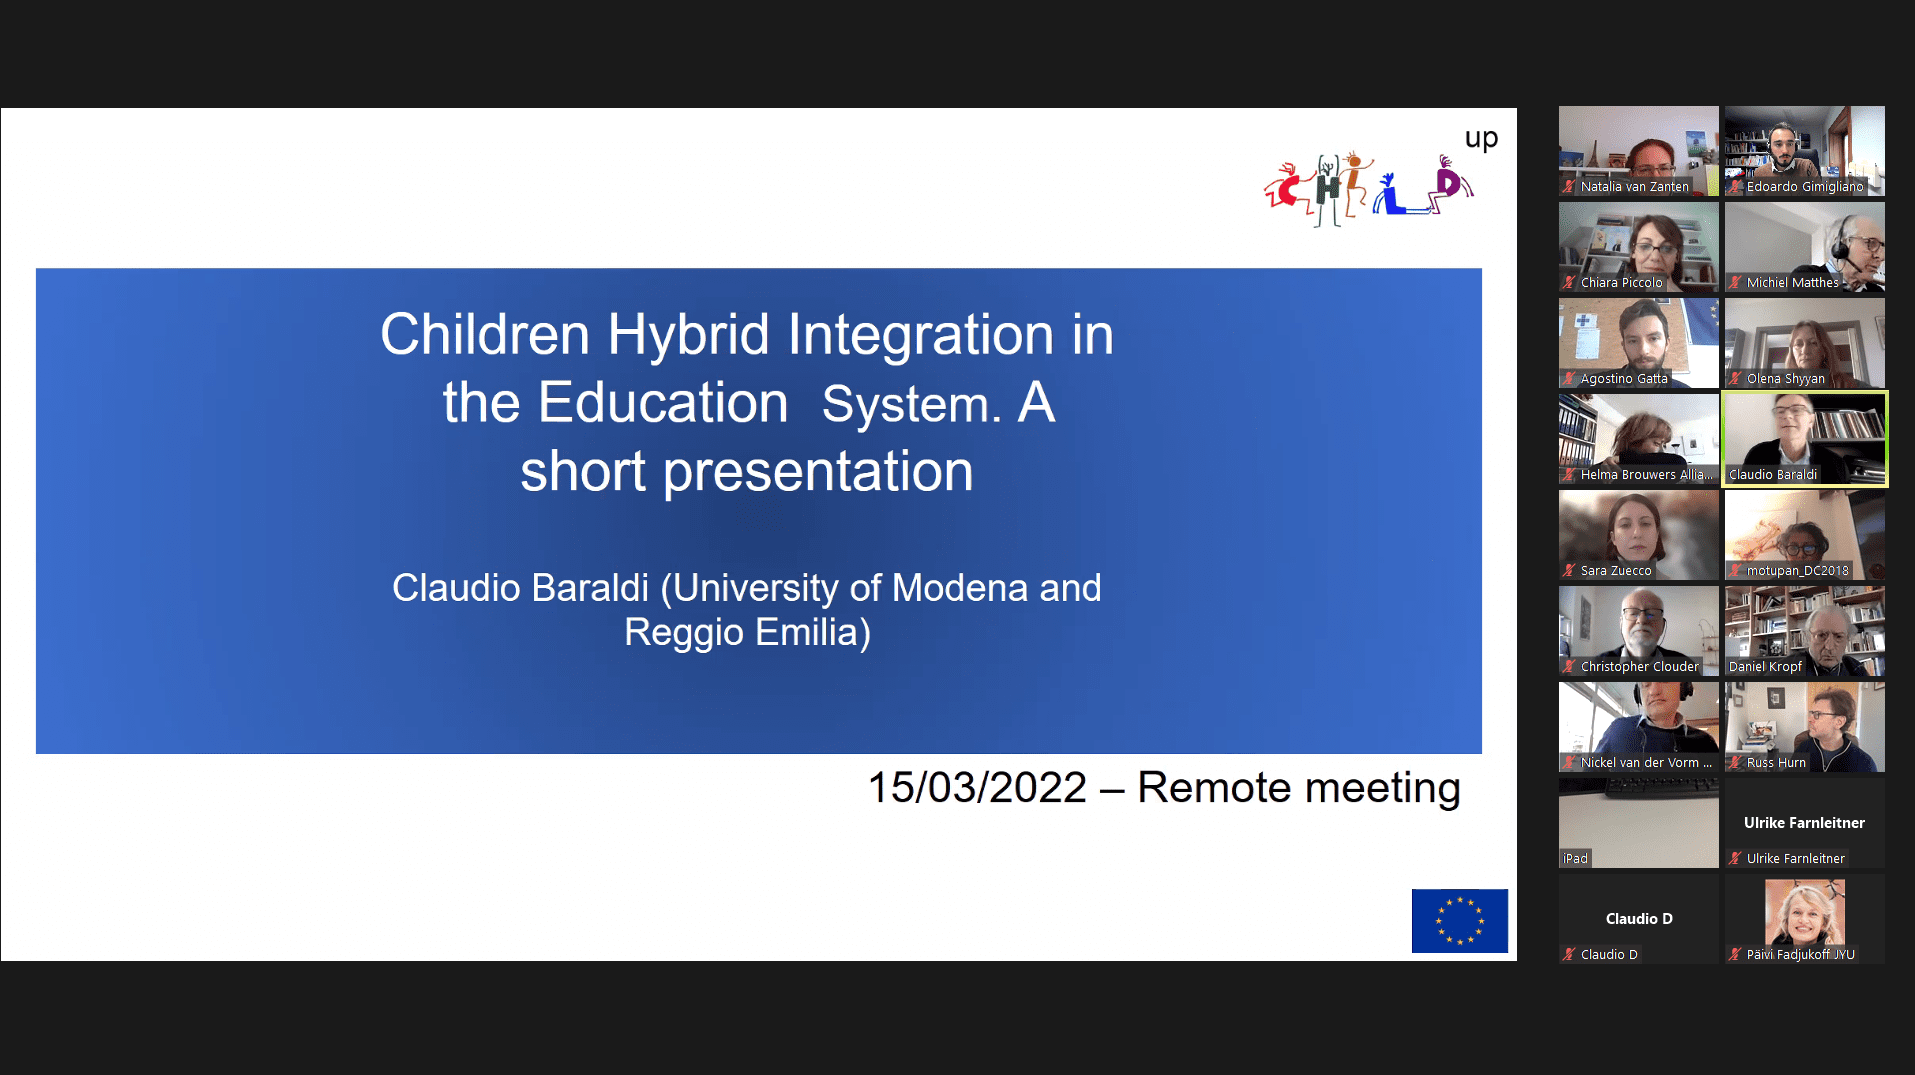 Professor Baraldi - CHILD-UP presentation